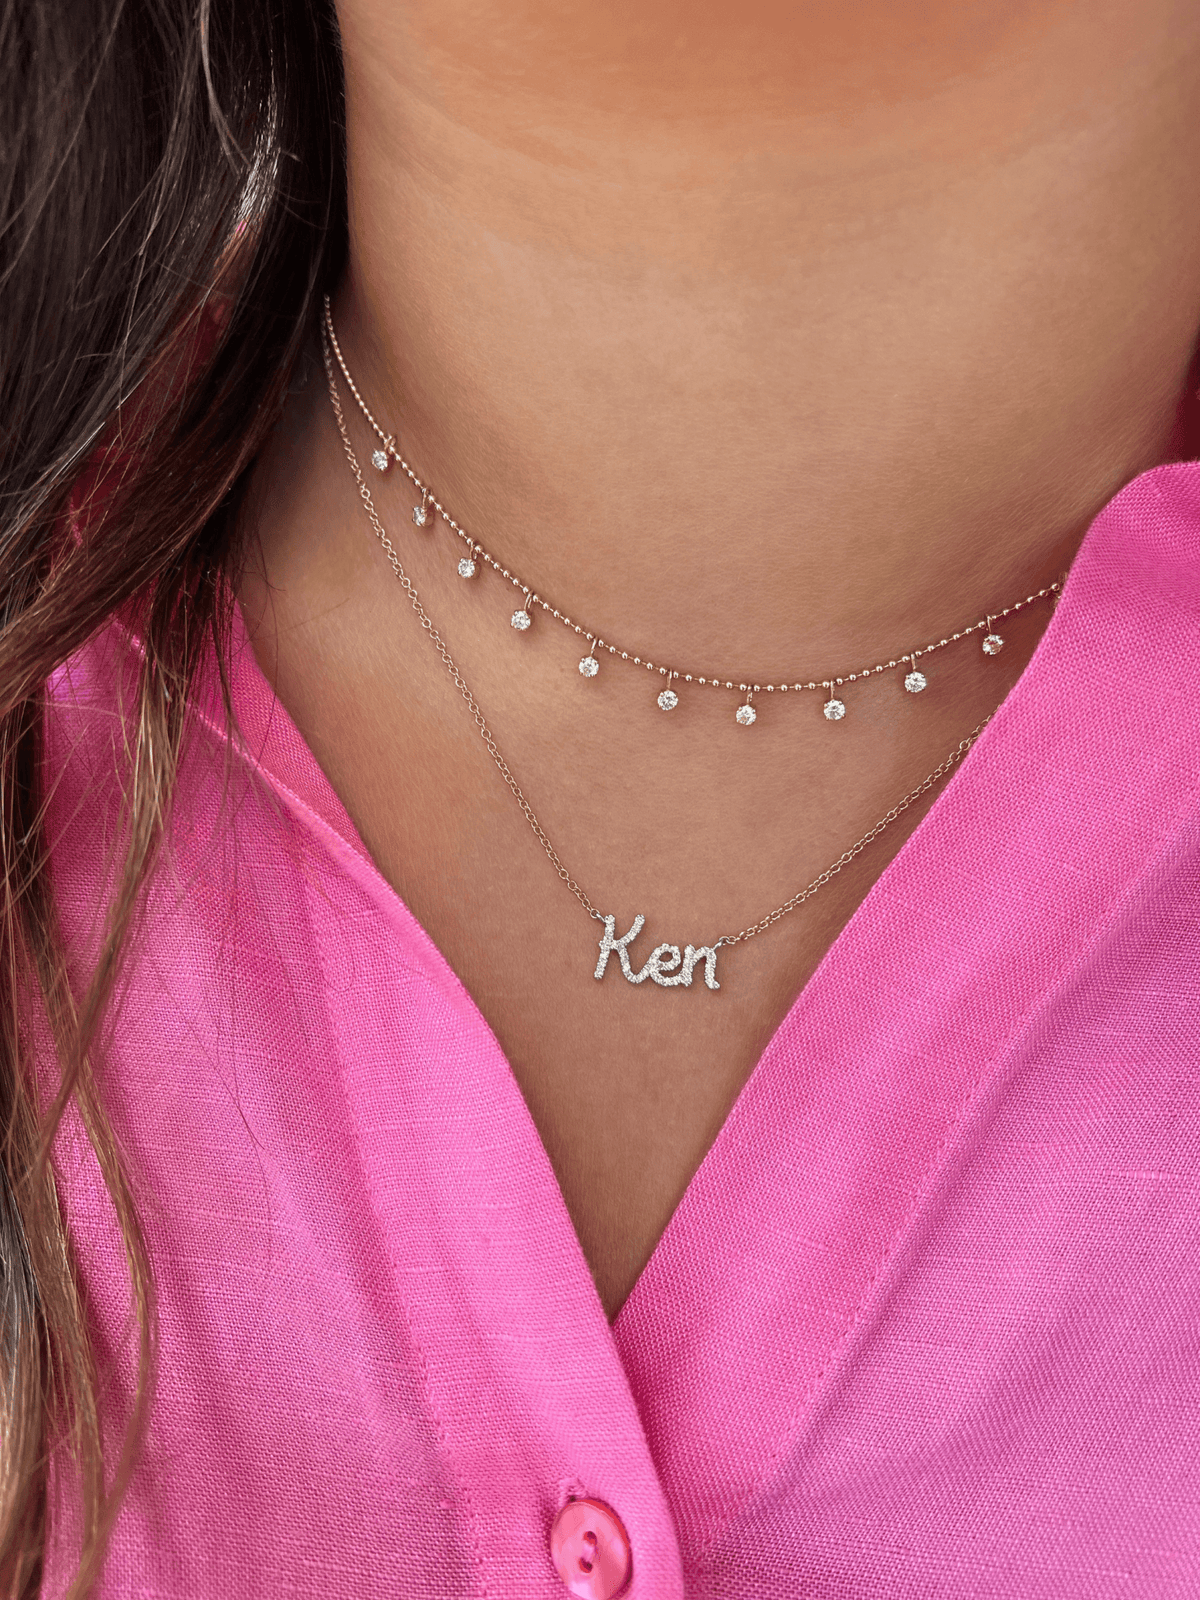 The Diamond Name Necklace 14K - LeMel